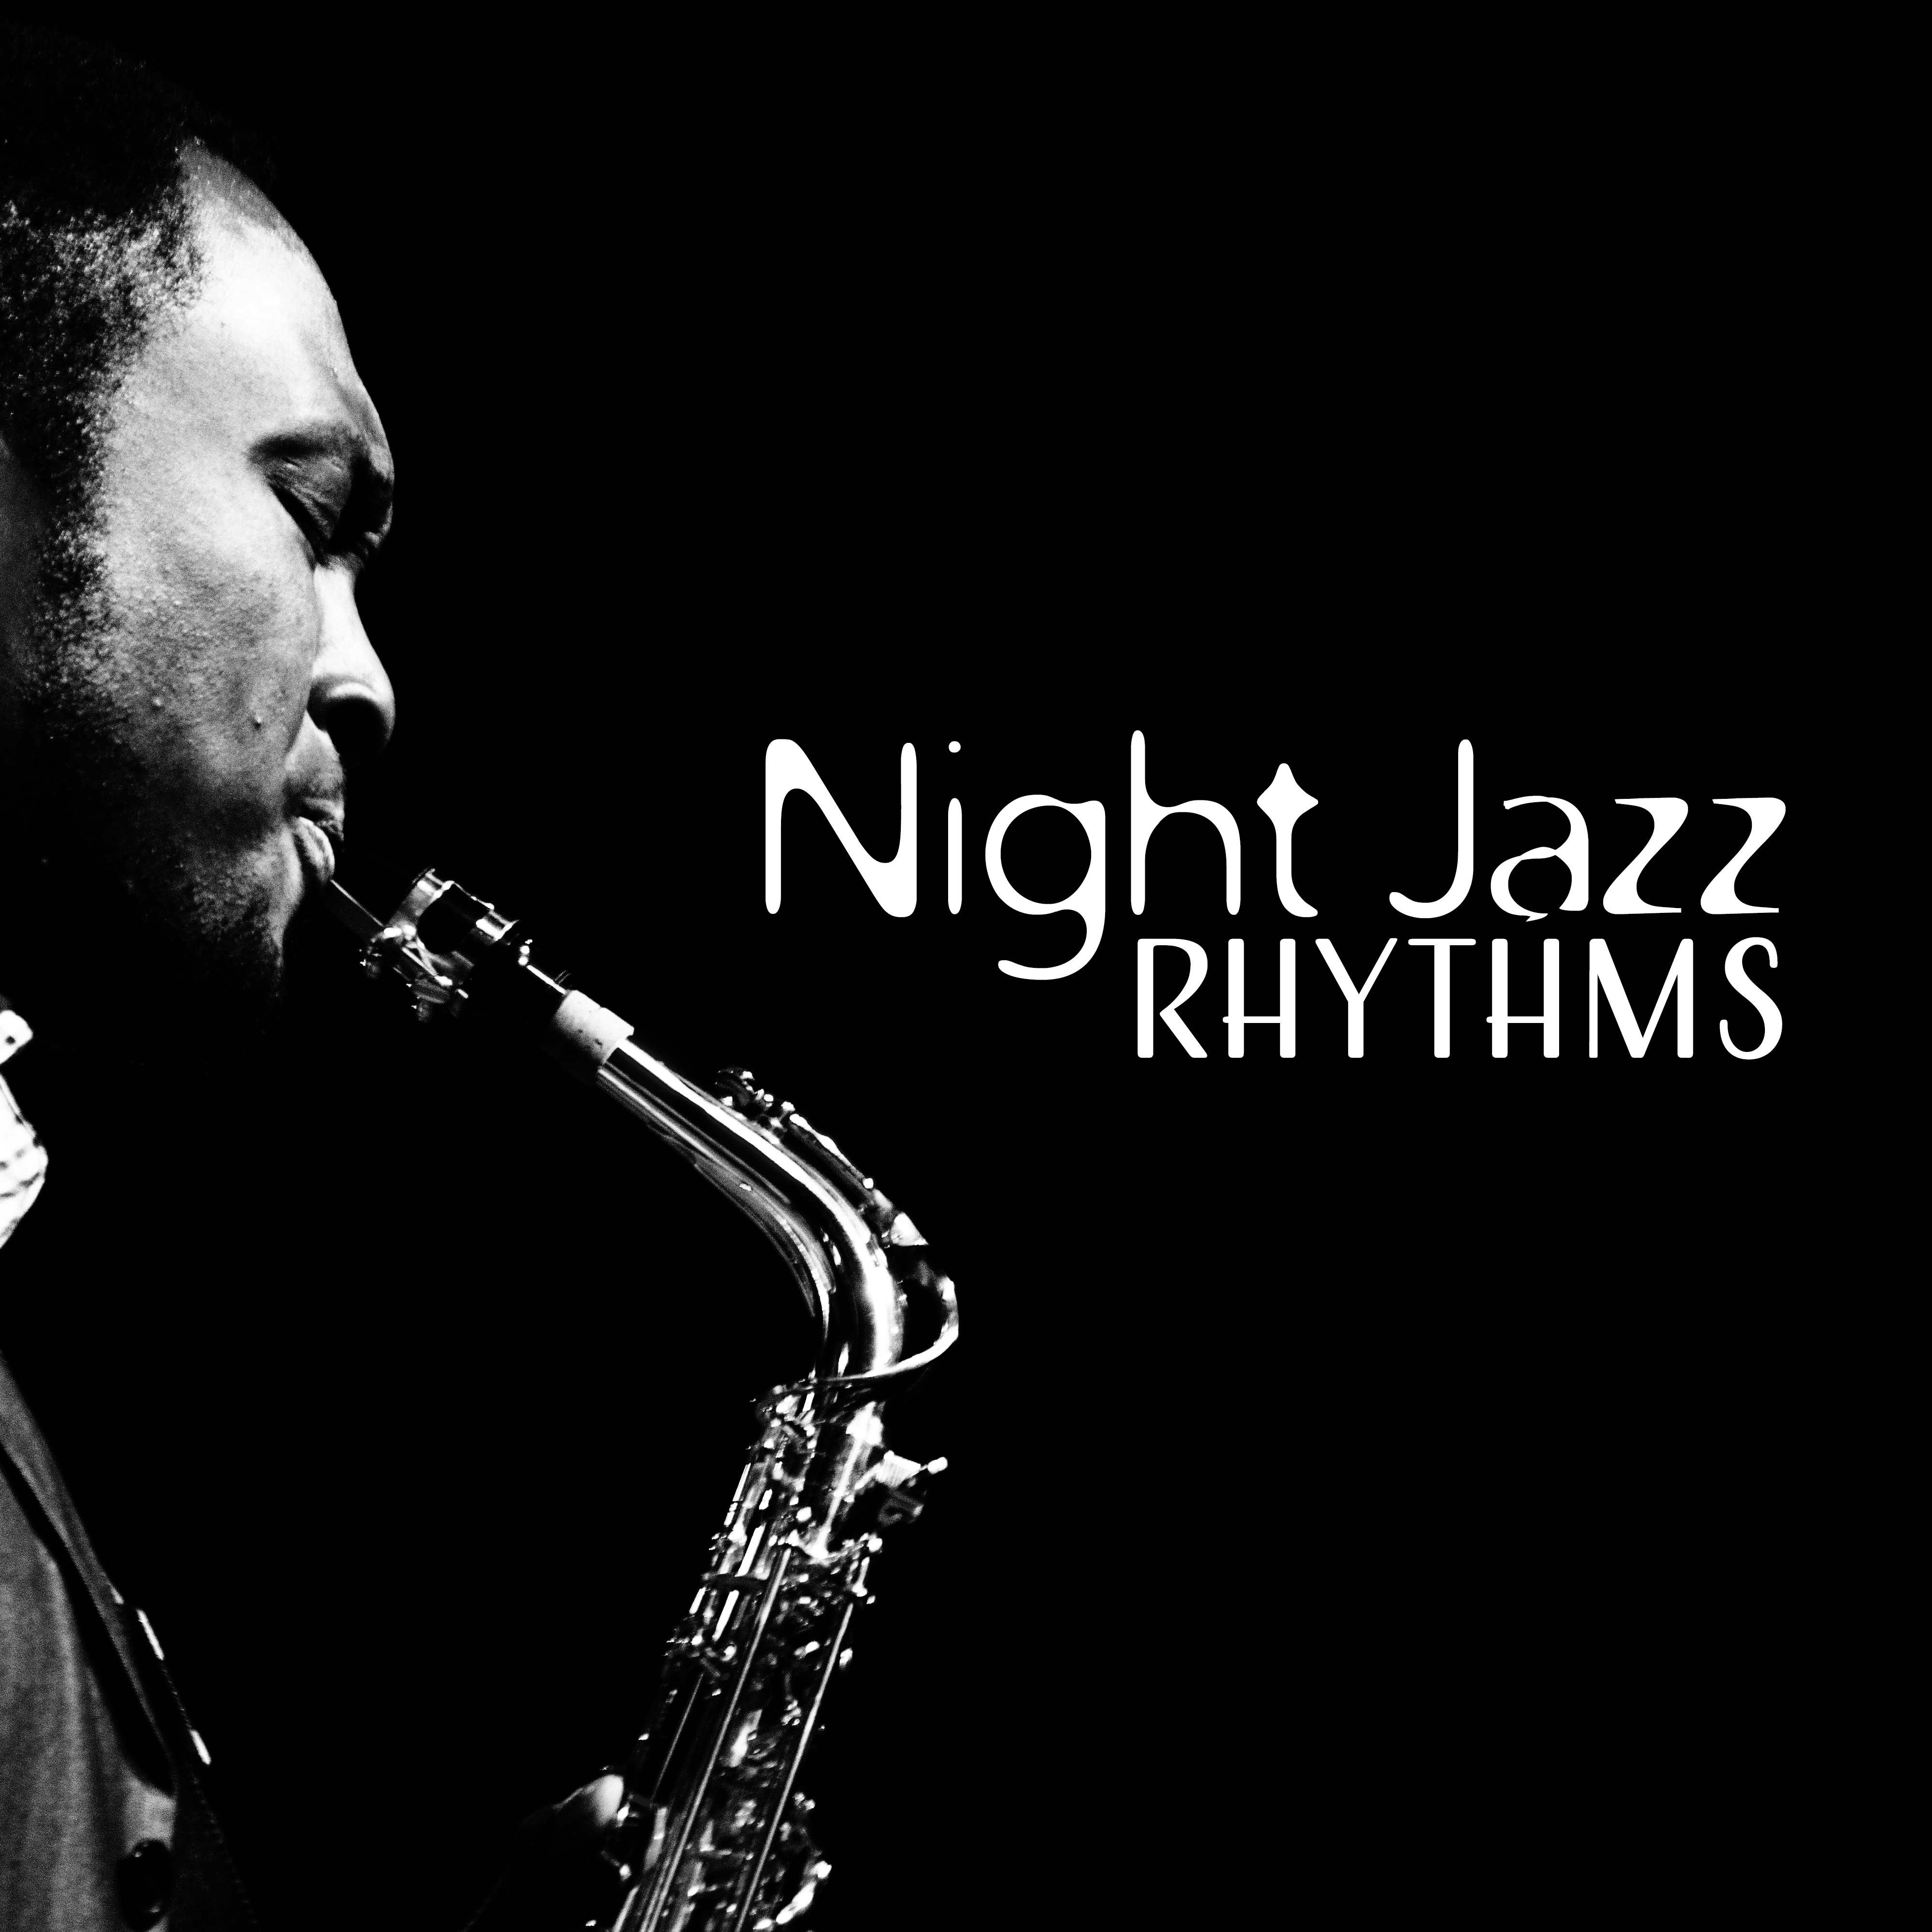 Night Jazz Rhythms  Smooth Night Music, Relax  Calm Down, Rest Your Mind  Body with Jazz Sounds